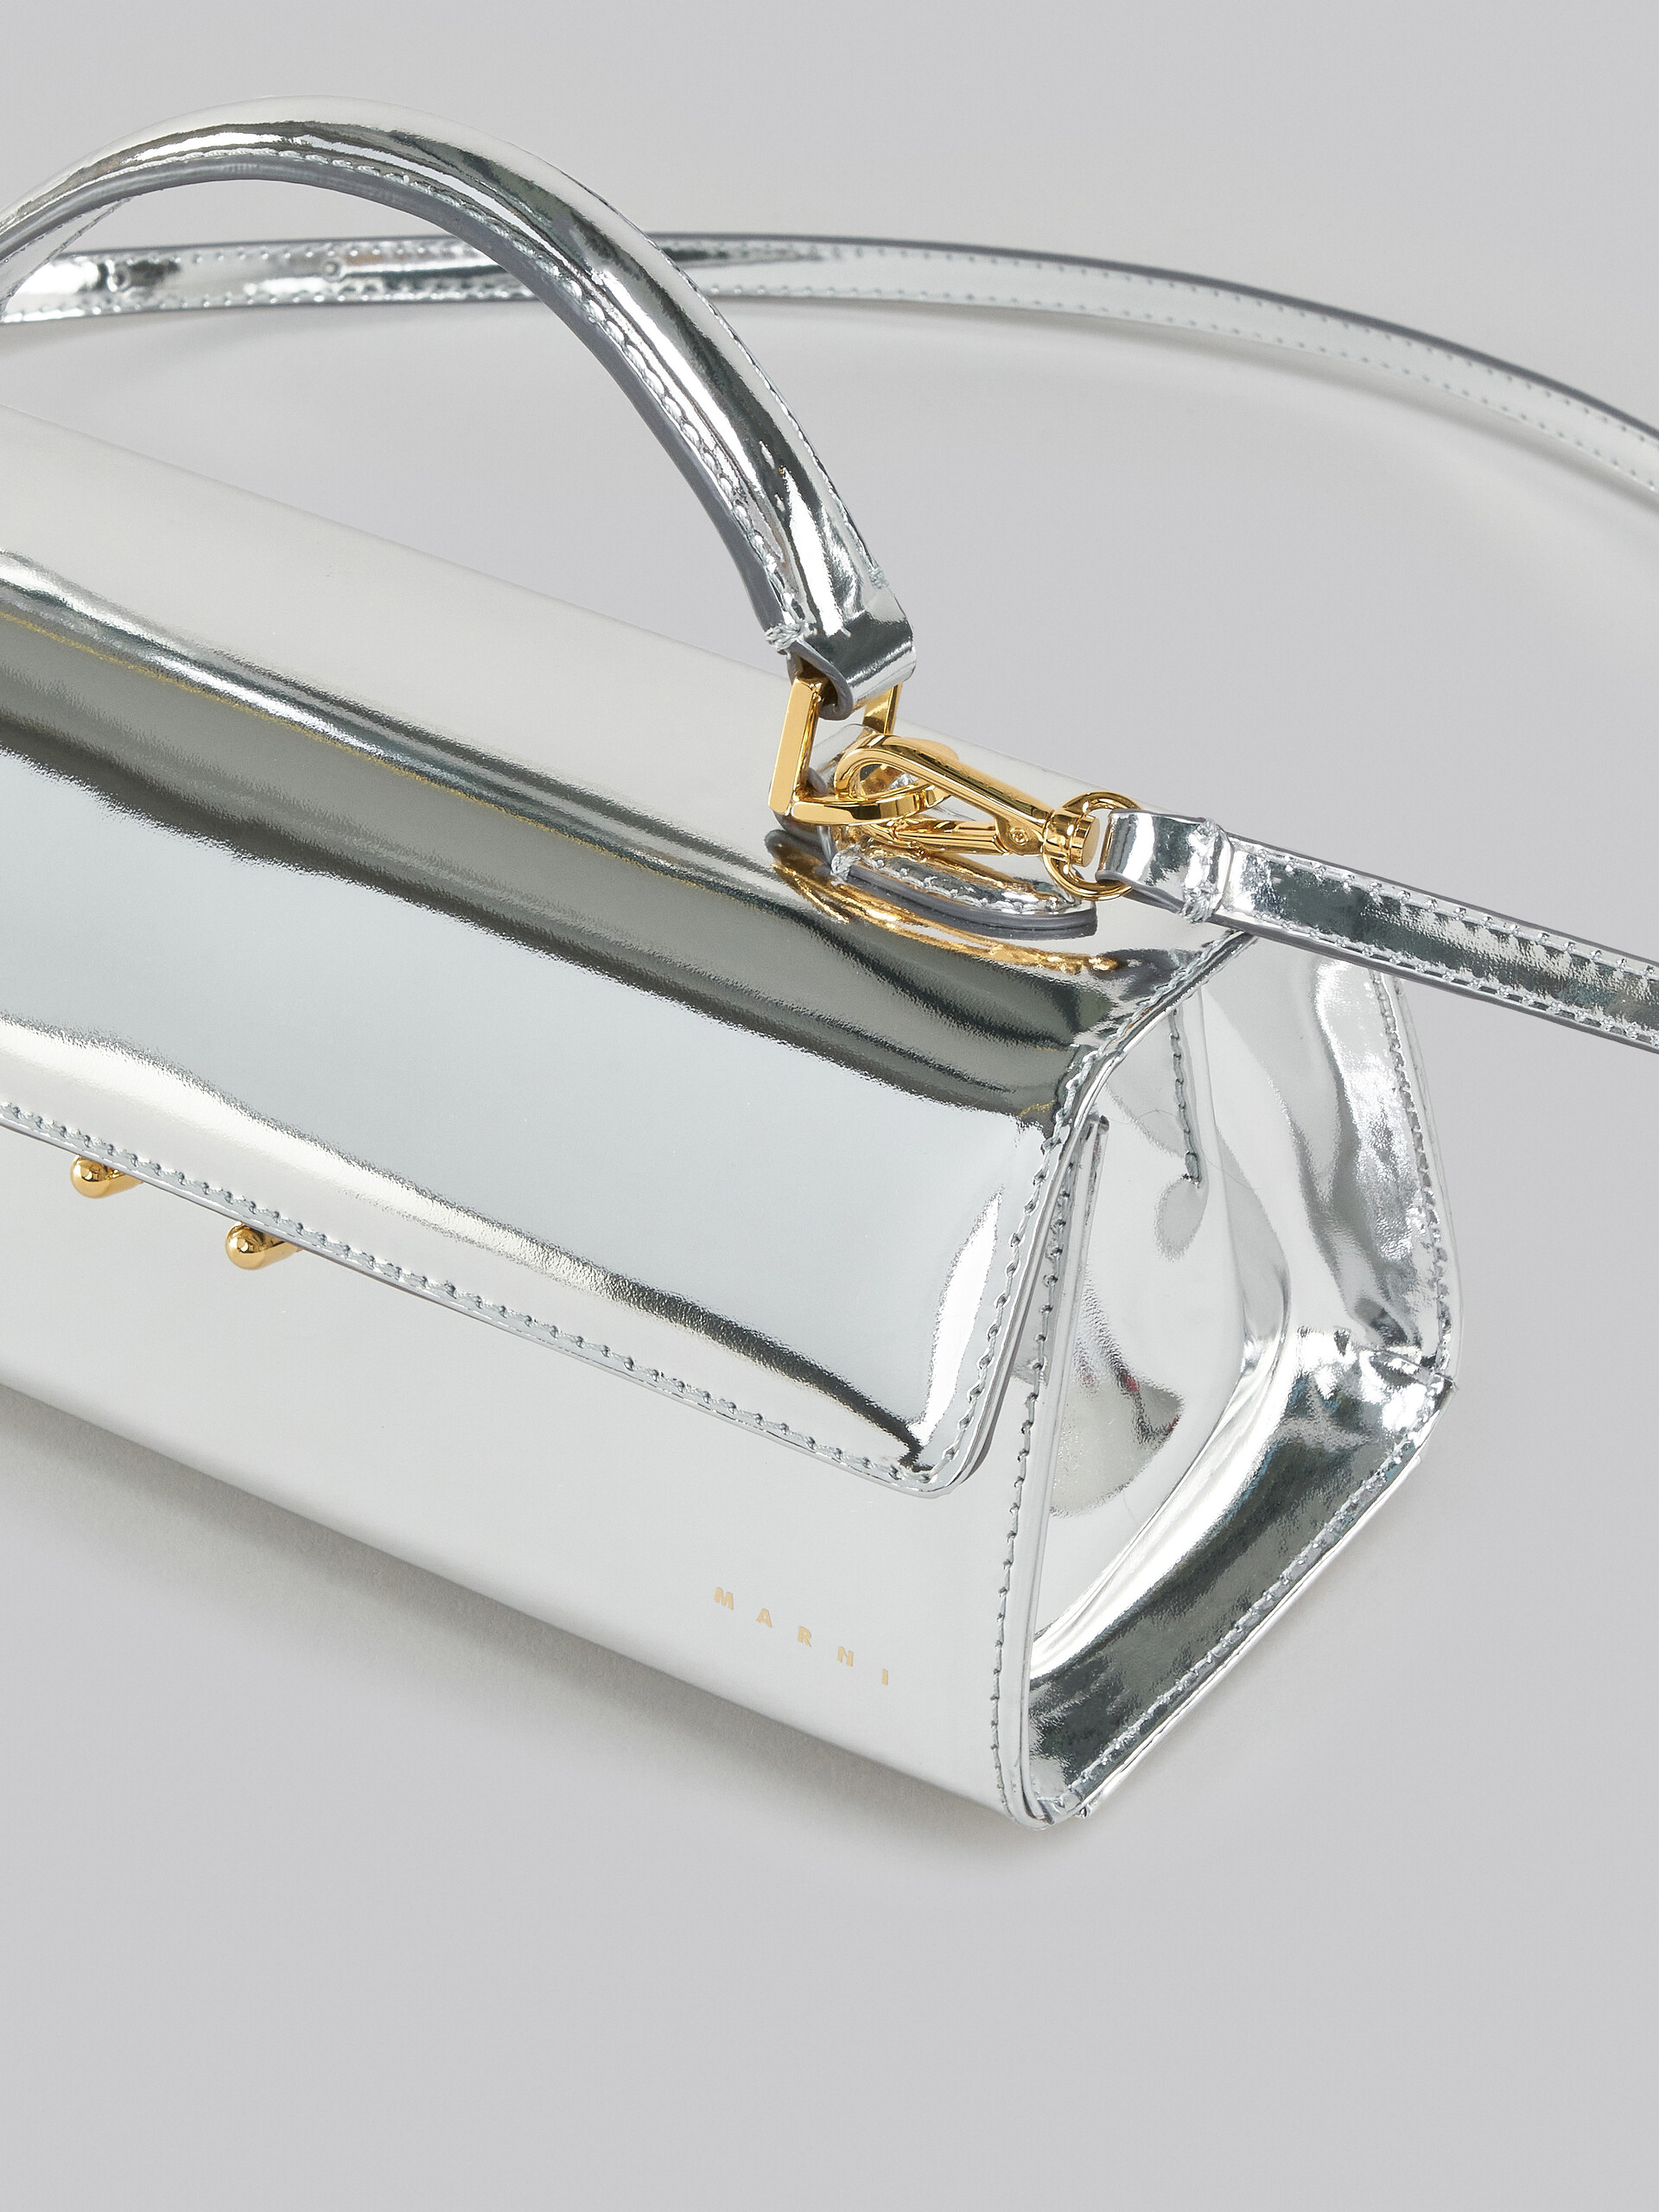 Relativity Medium Bag in silver-tone leather - Handbag - Image 4